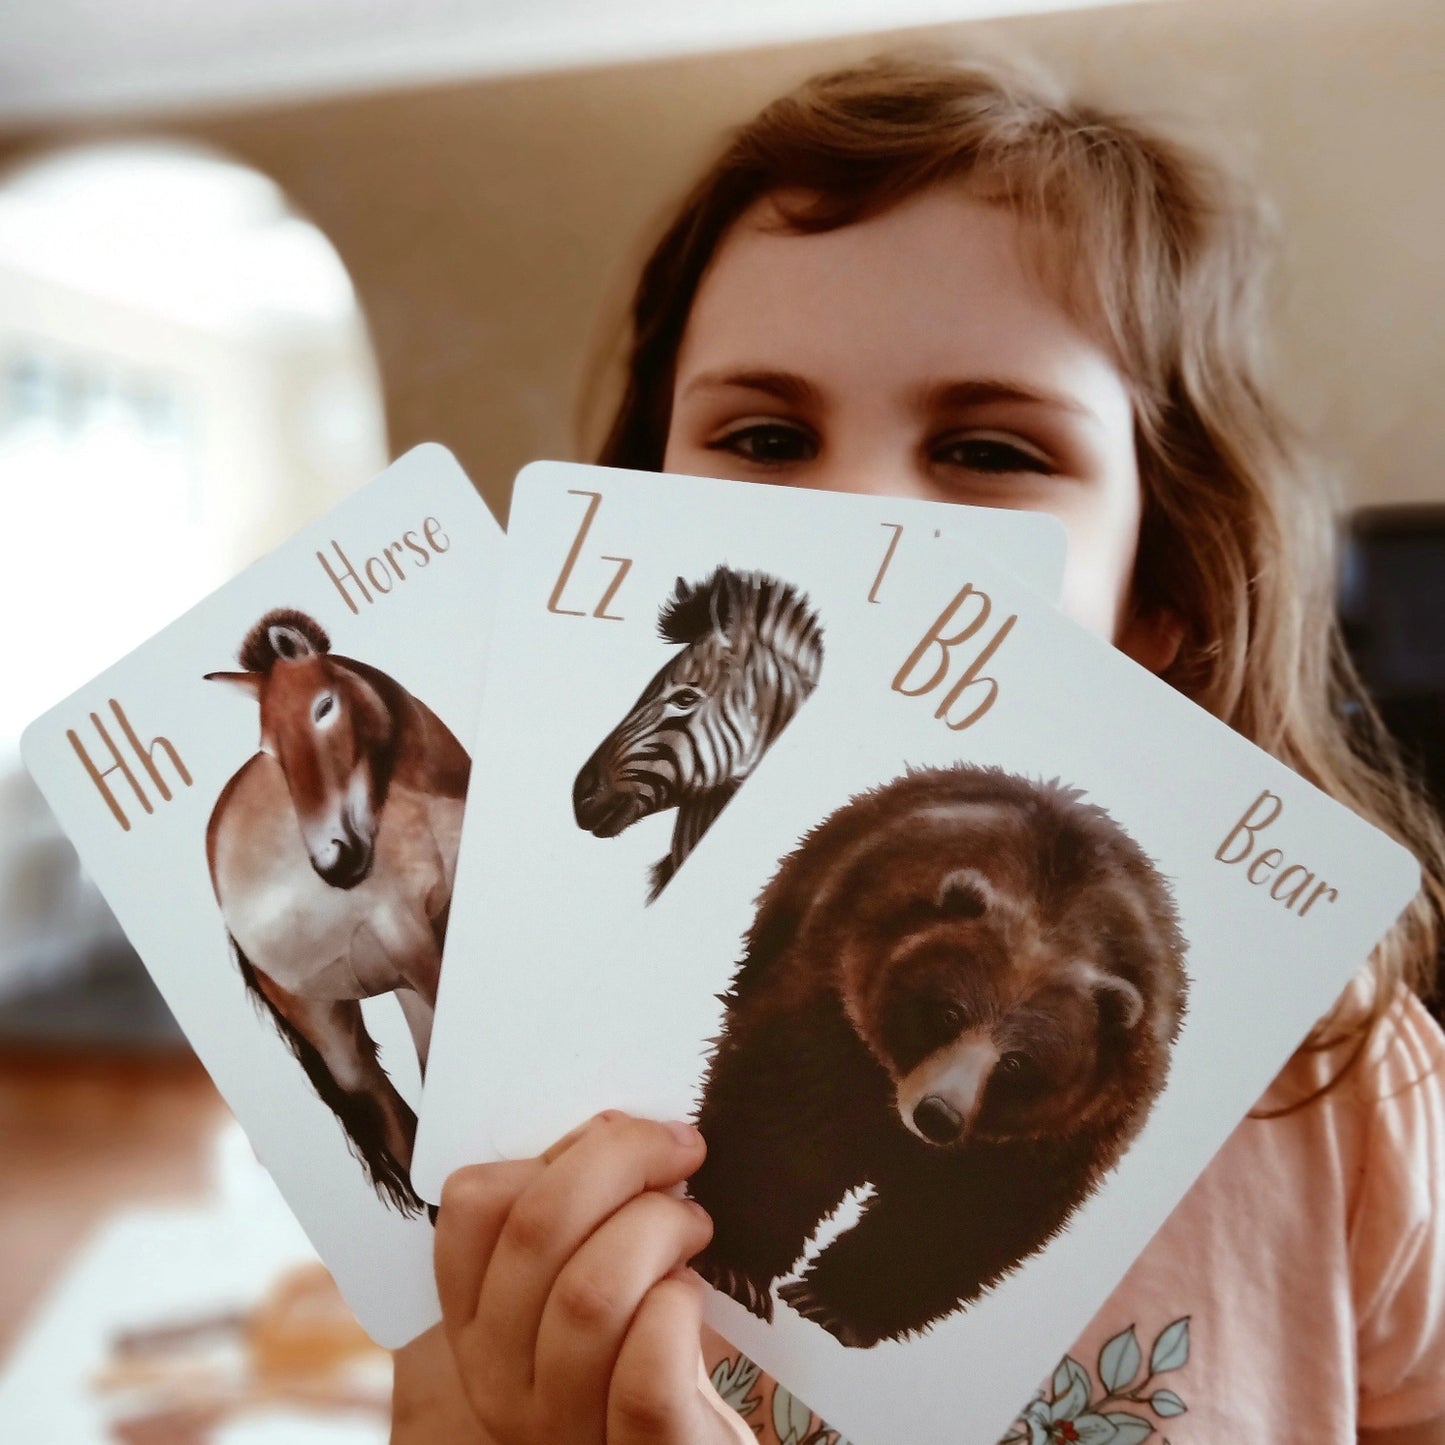 Modern Monty Animal Alphabet Flash Cards